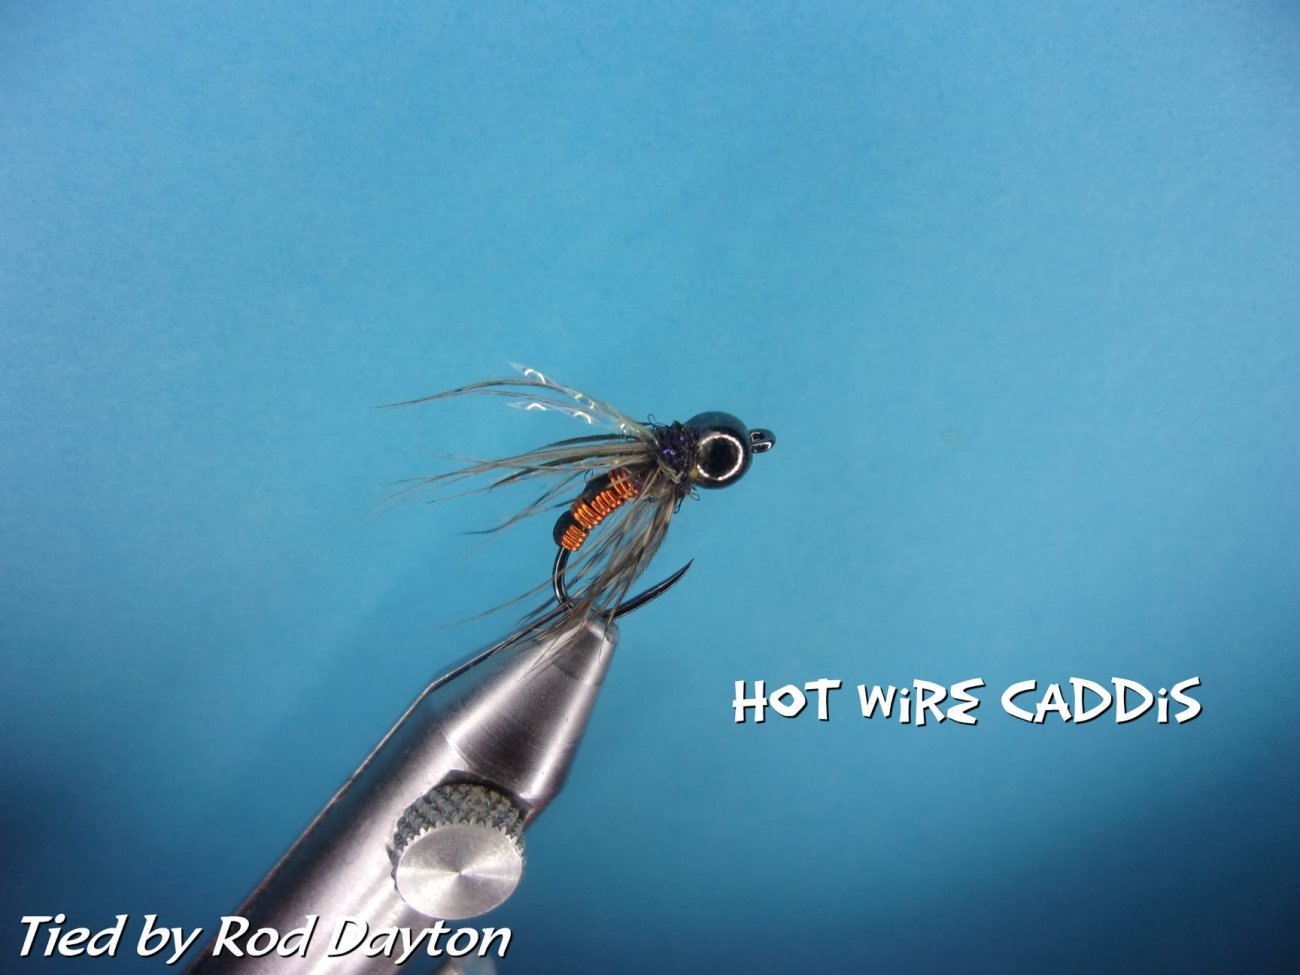 Hot Wire Caddis.jpg